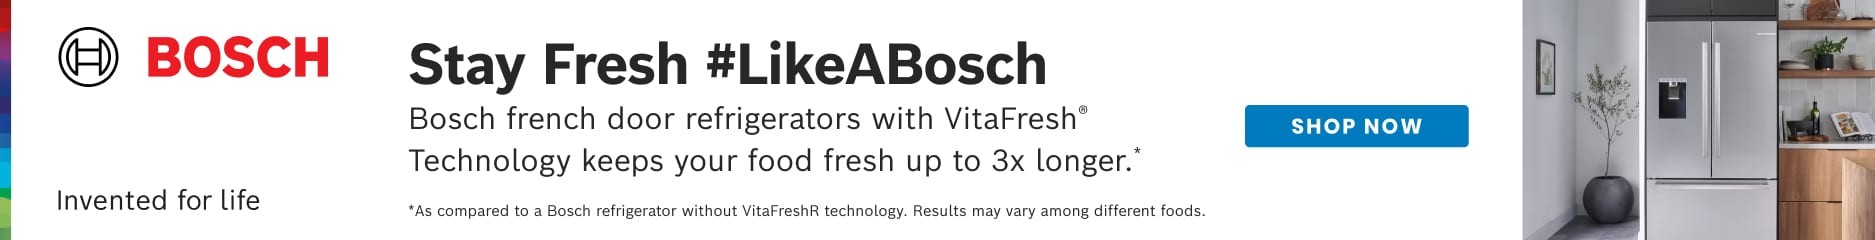 Bosch - Stay fresh like a Bosch - Vitafresh technology keeps food fresh up to 3x longer. * Shop now